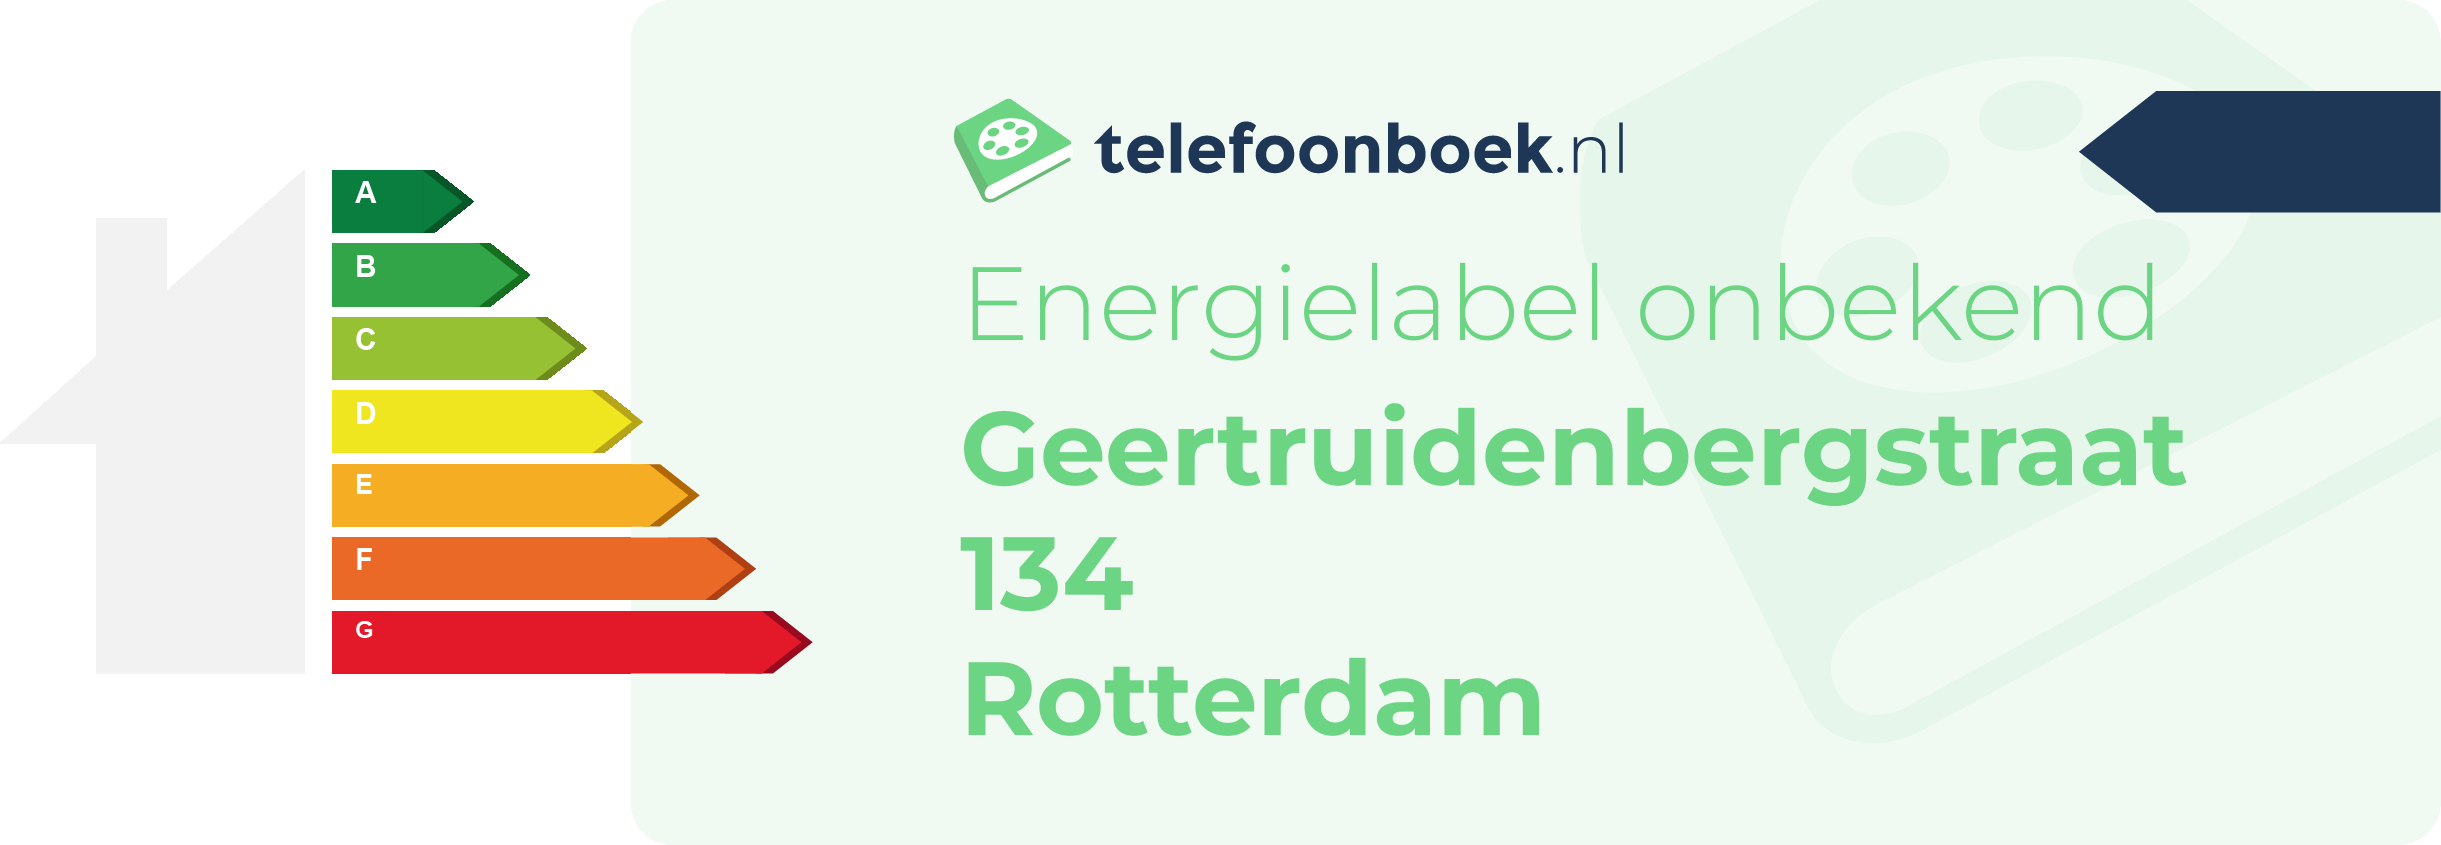 Energielabel Geertruidenbergstraat 134 Rotterdam